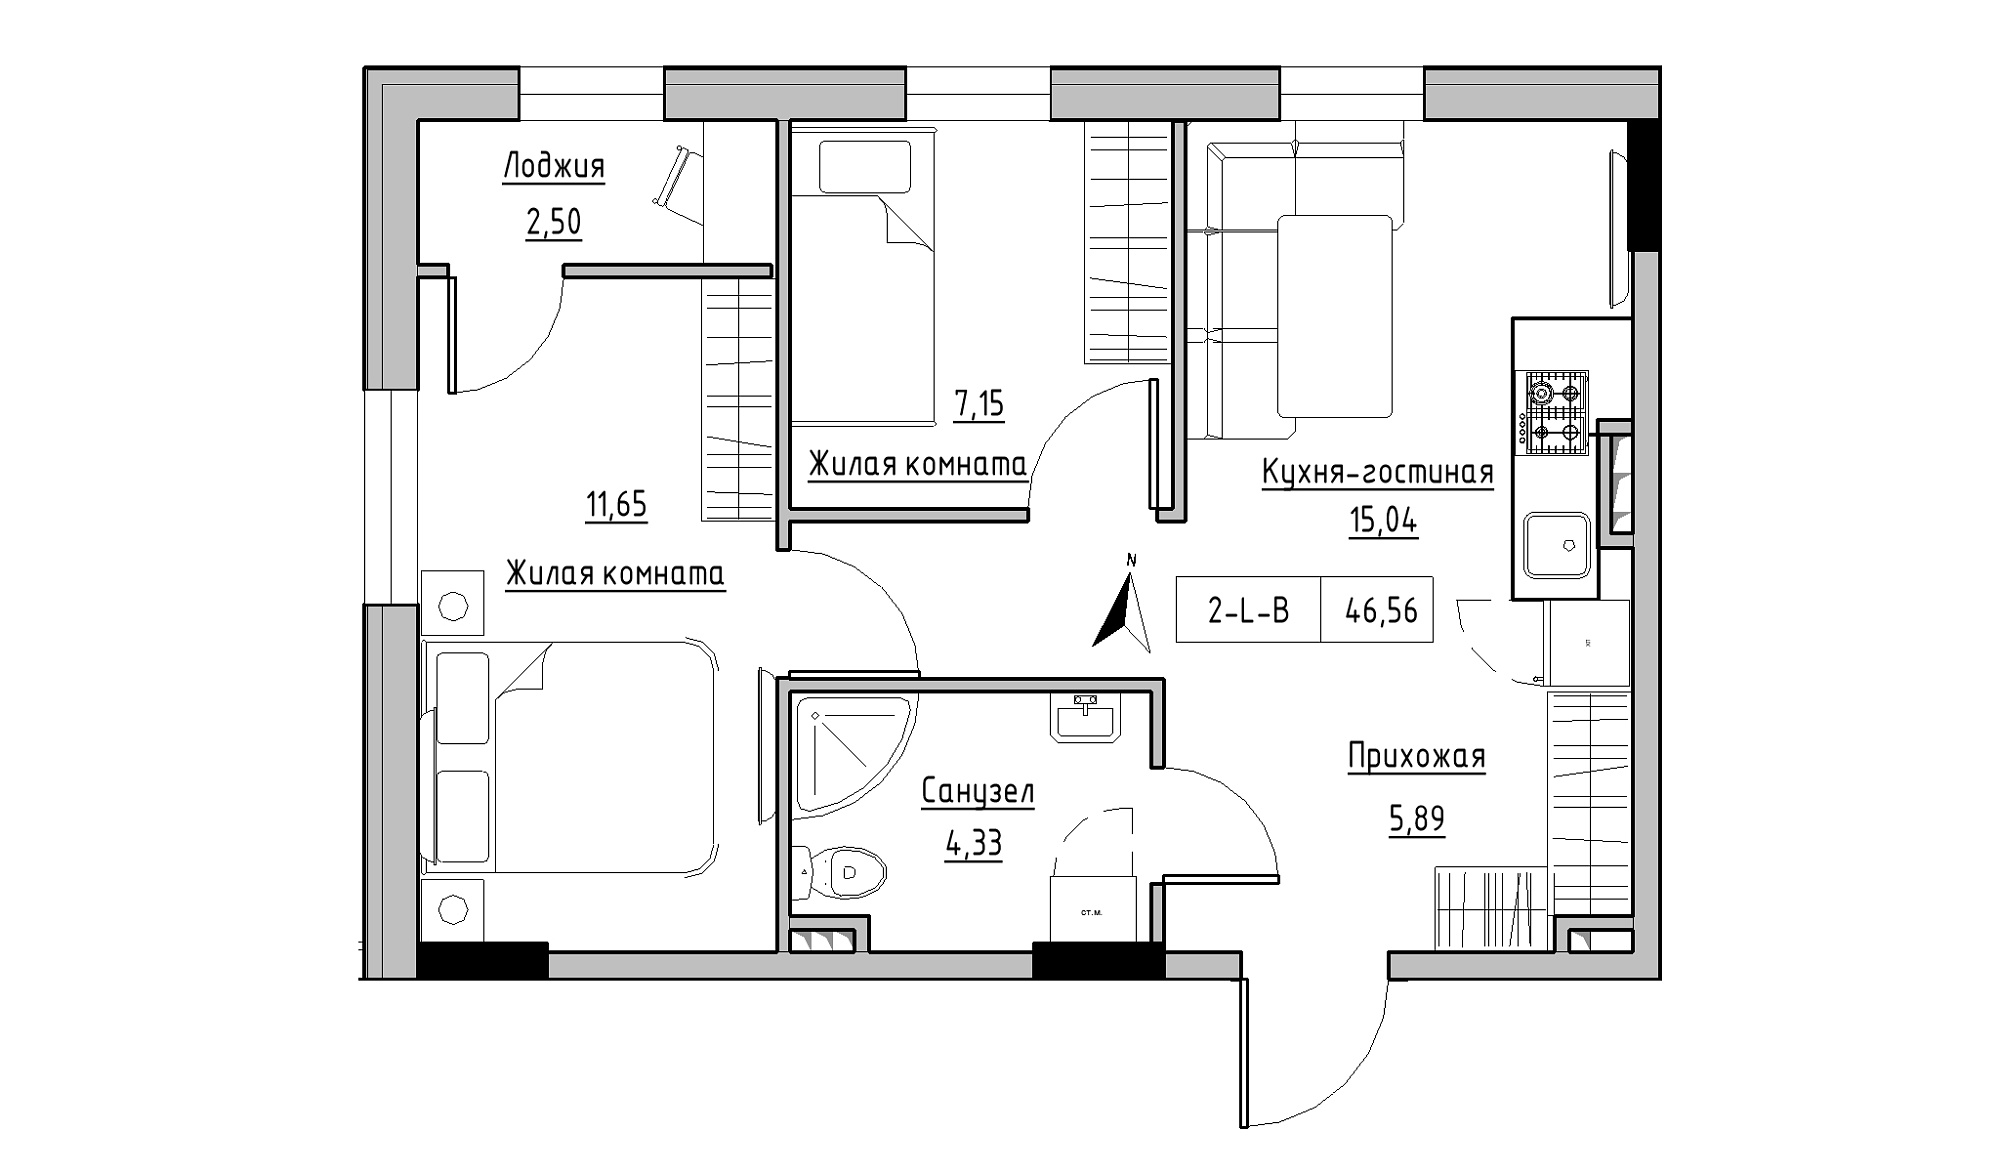 Planning 2-rm flats area 46.56m2, KS-025-02/0006.